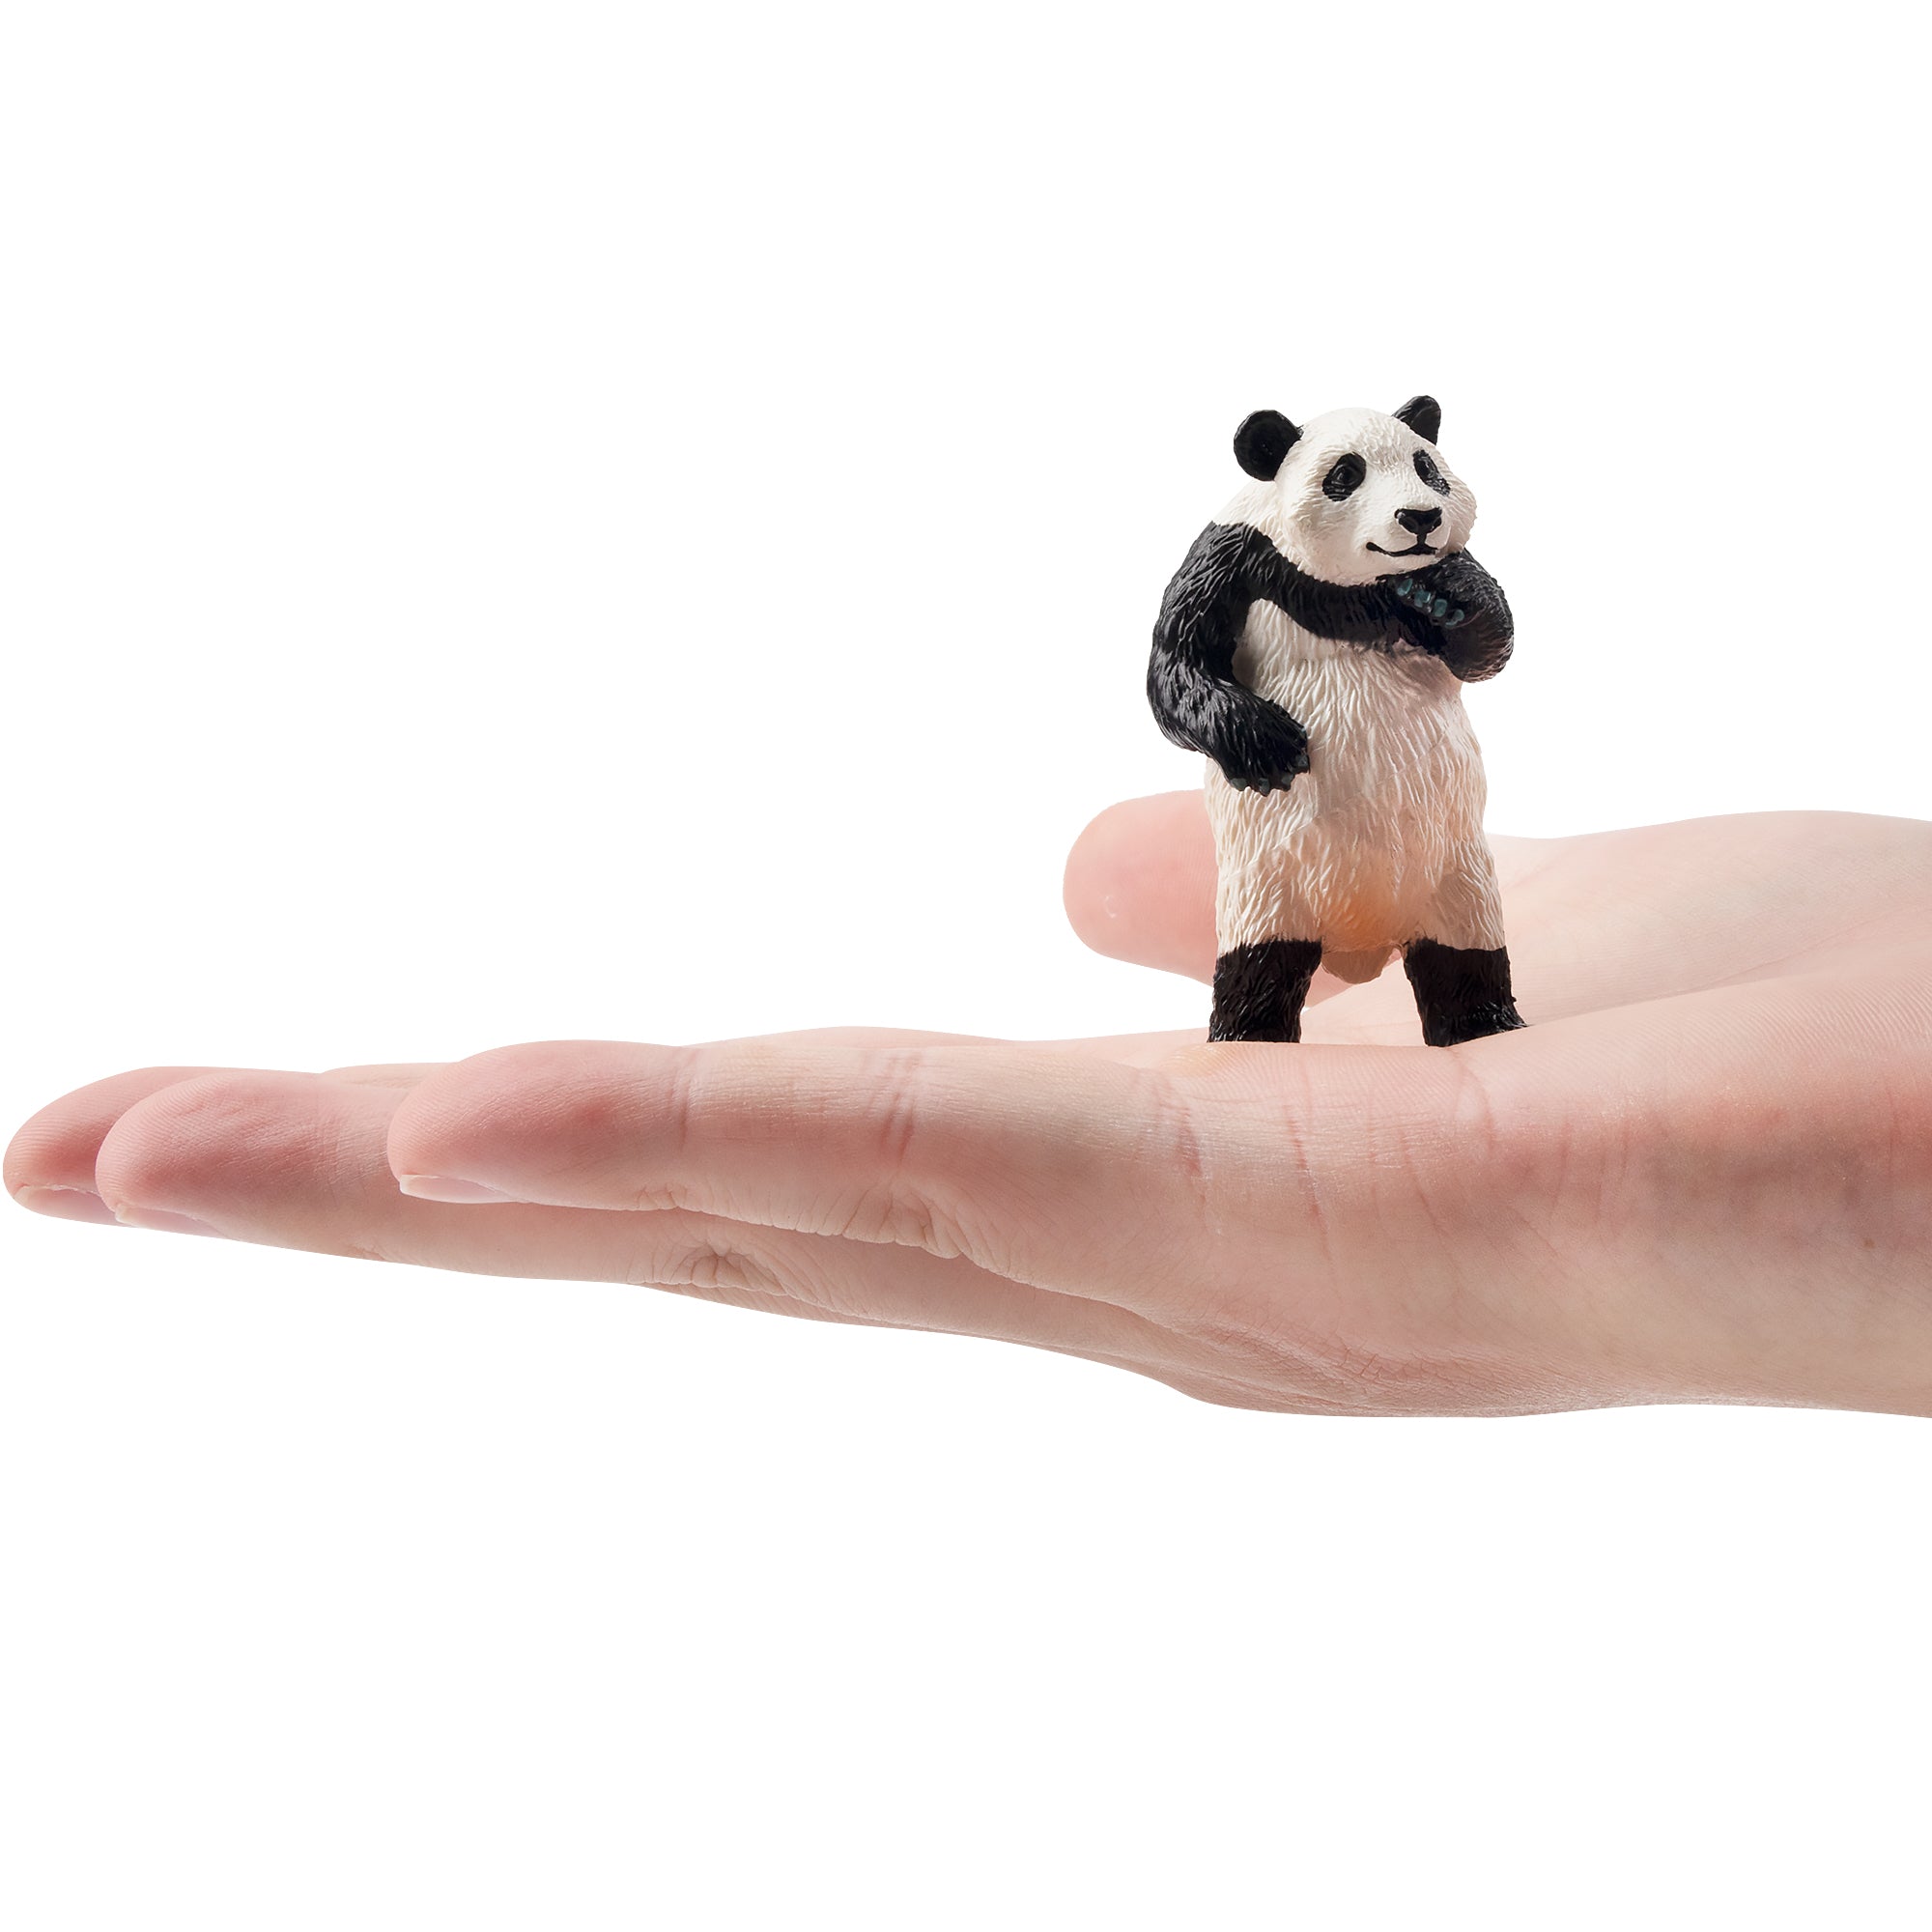 Toymany Standing Panda Cub Figurine Toy-on hand